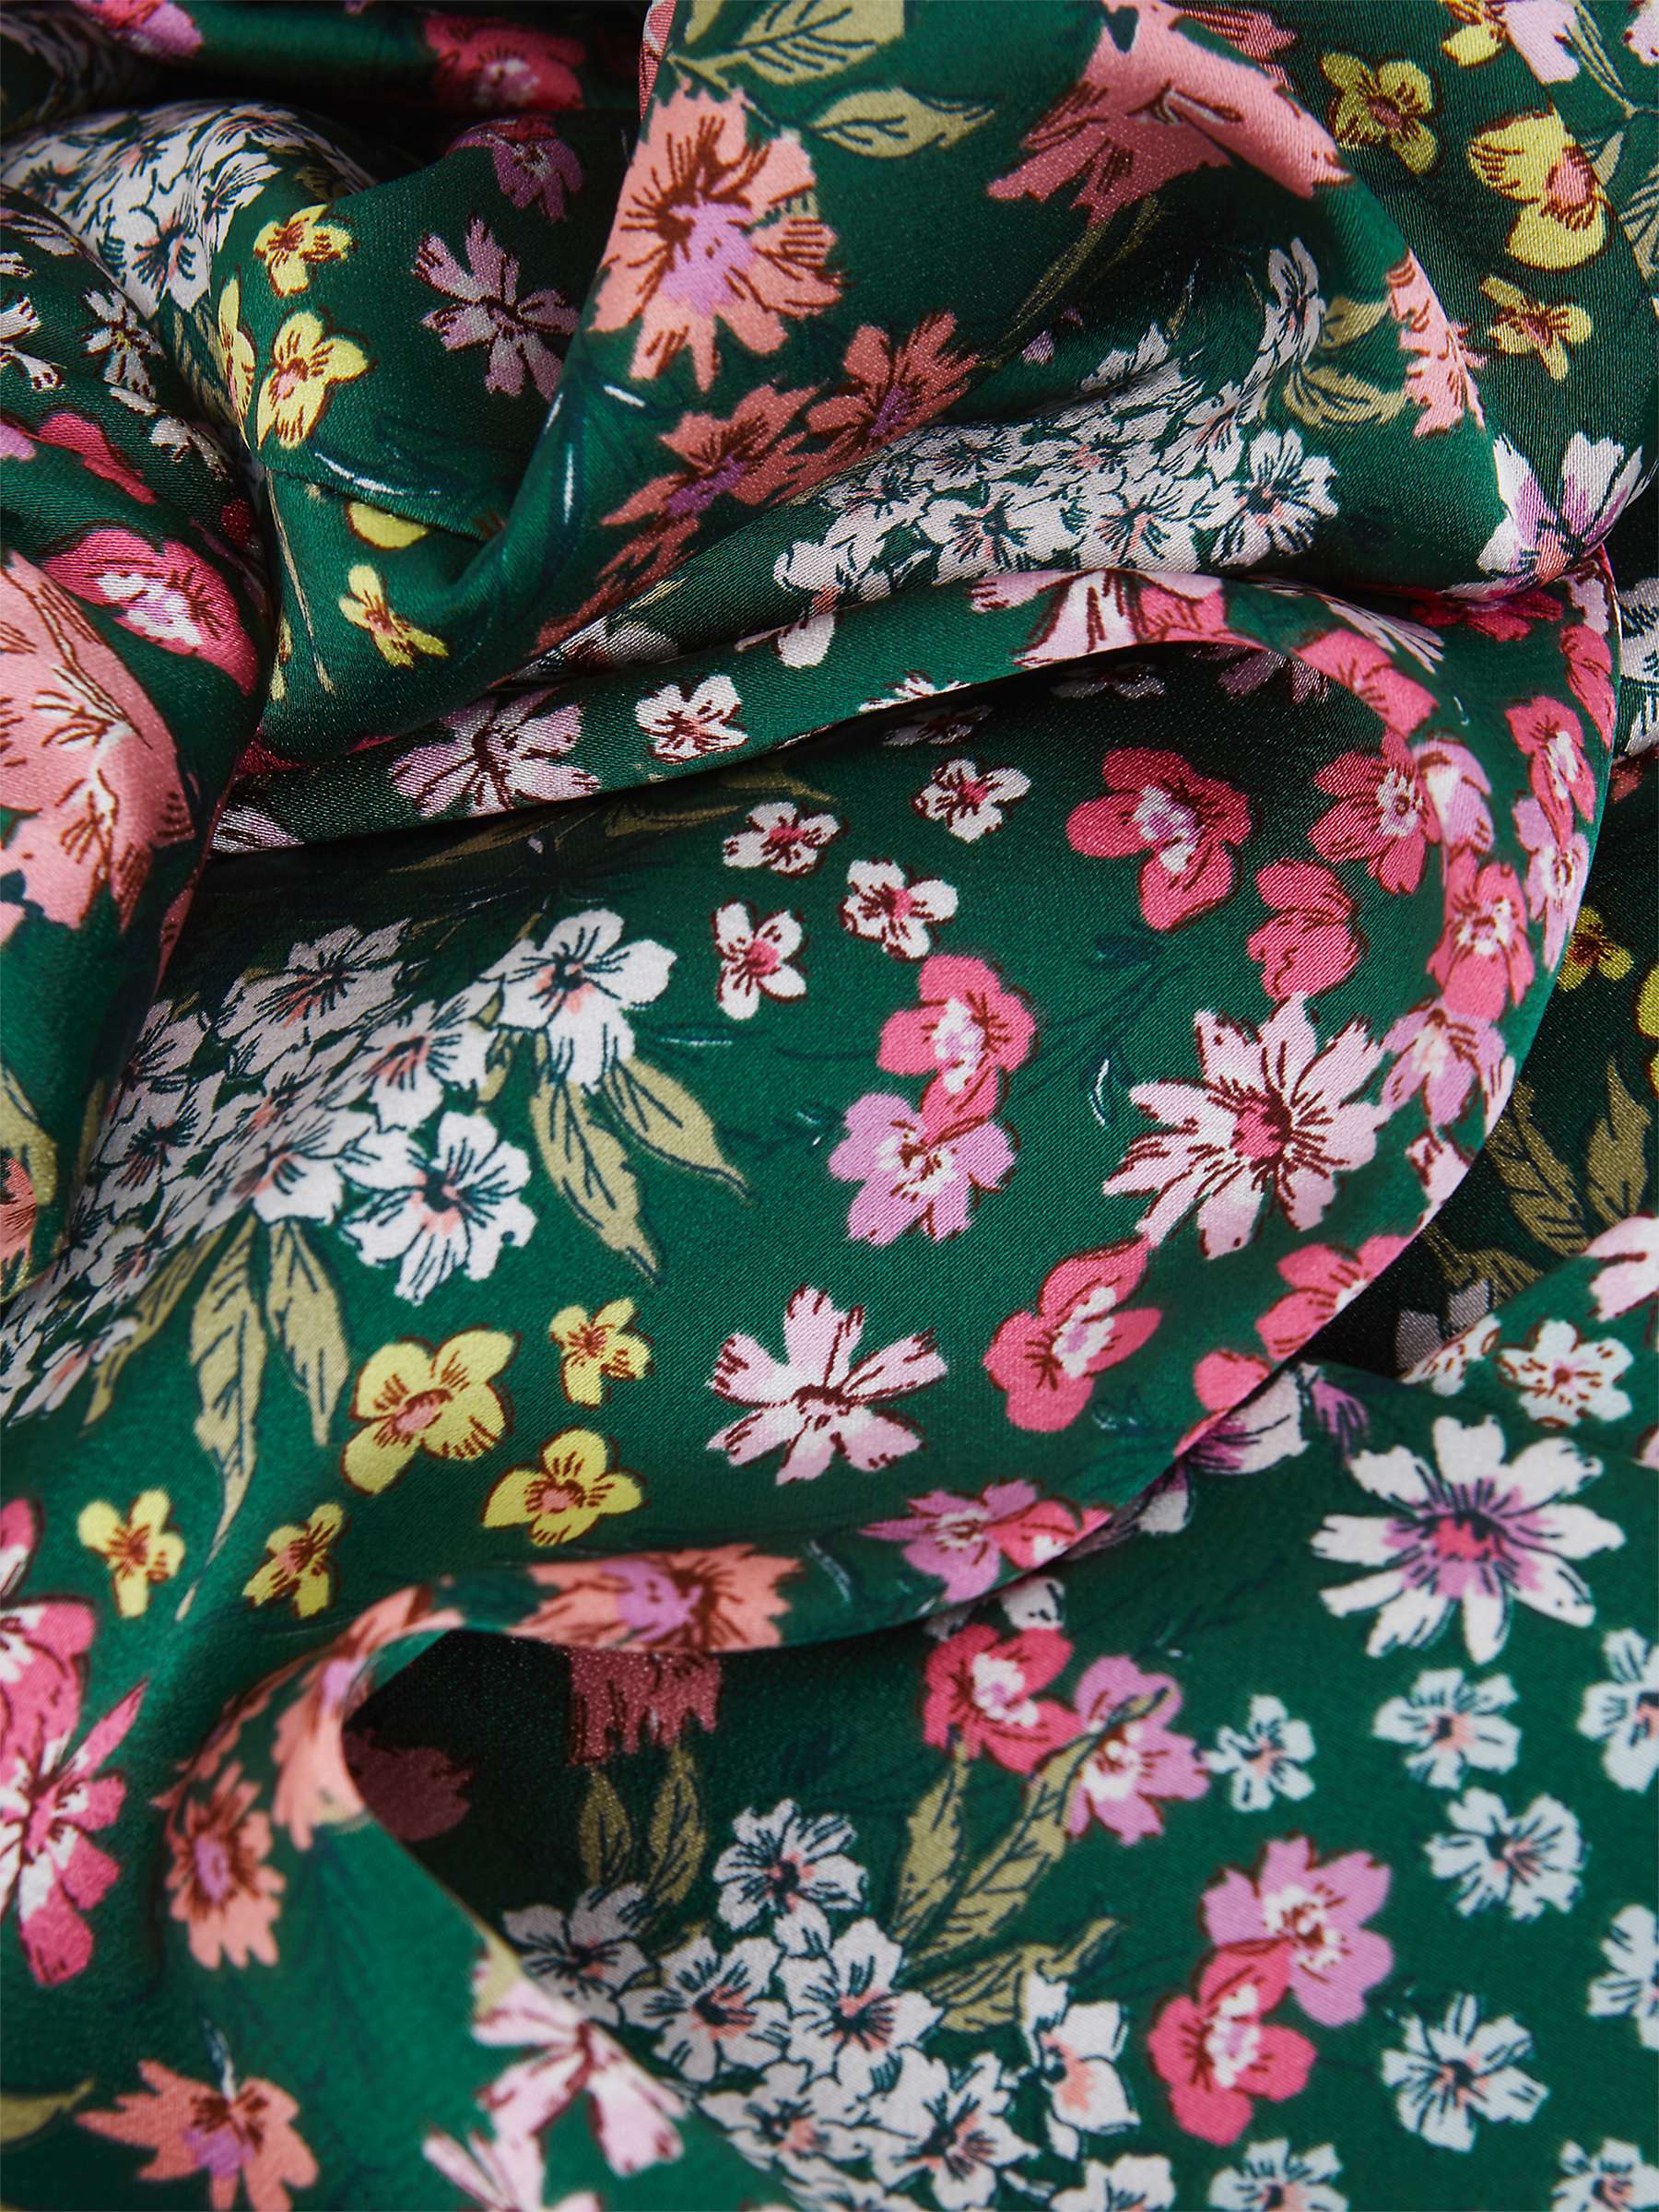 Buy Hobbs Christina Midi Floral Dress, Green/Multi Online at johnlewis.com